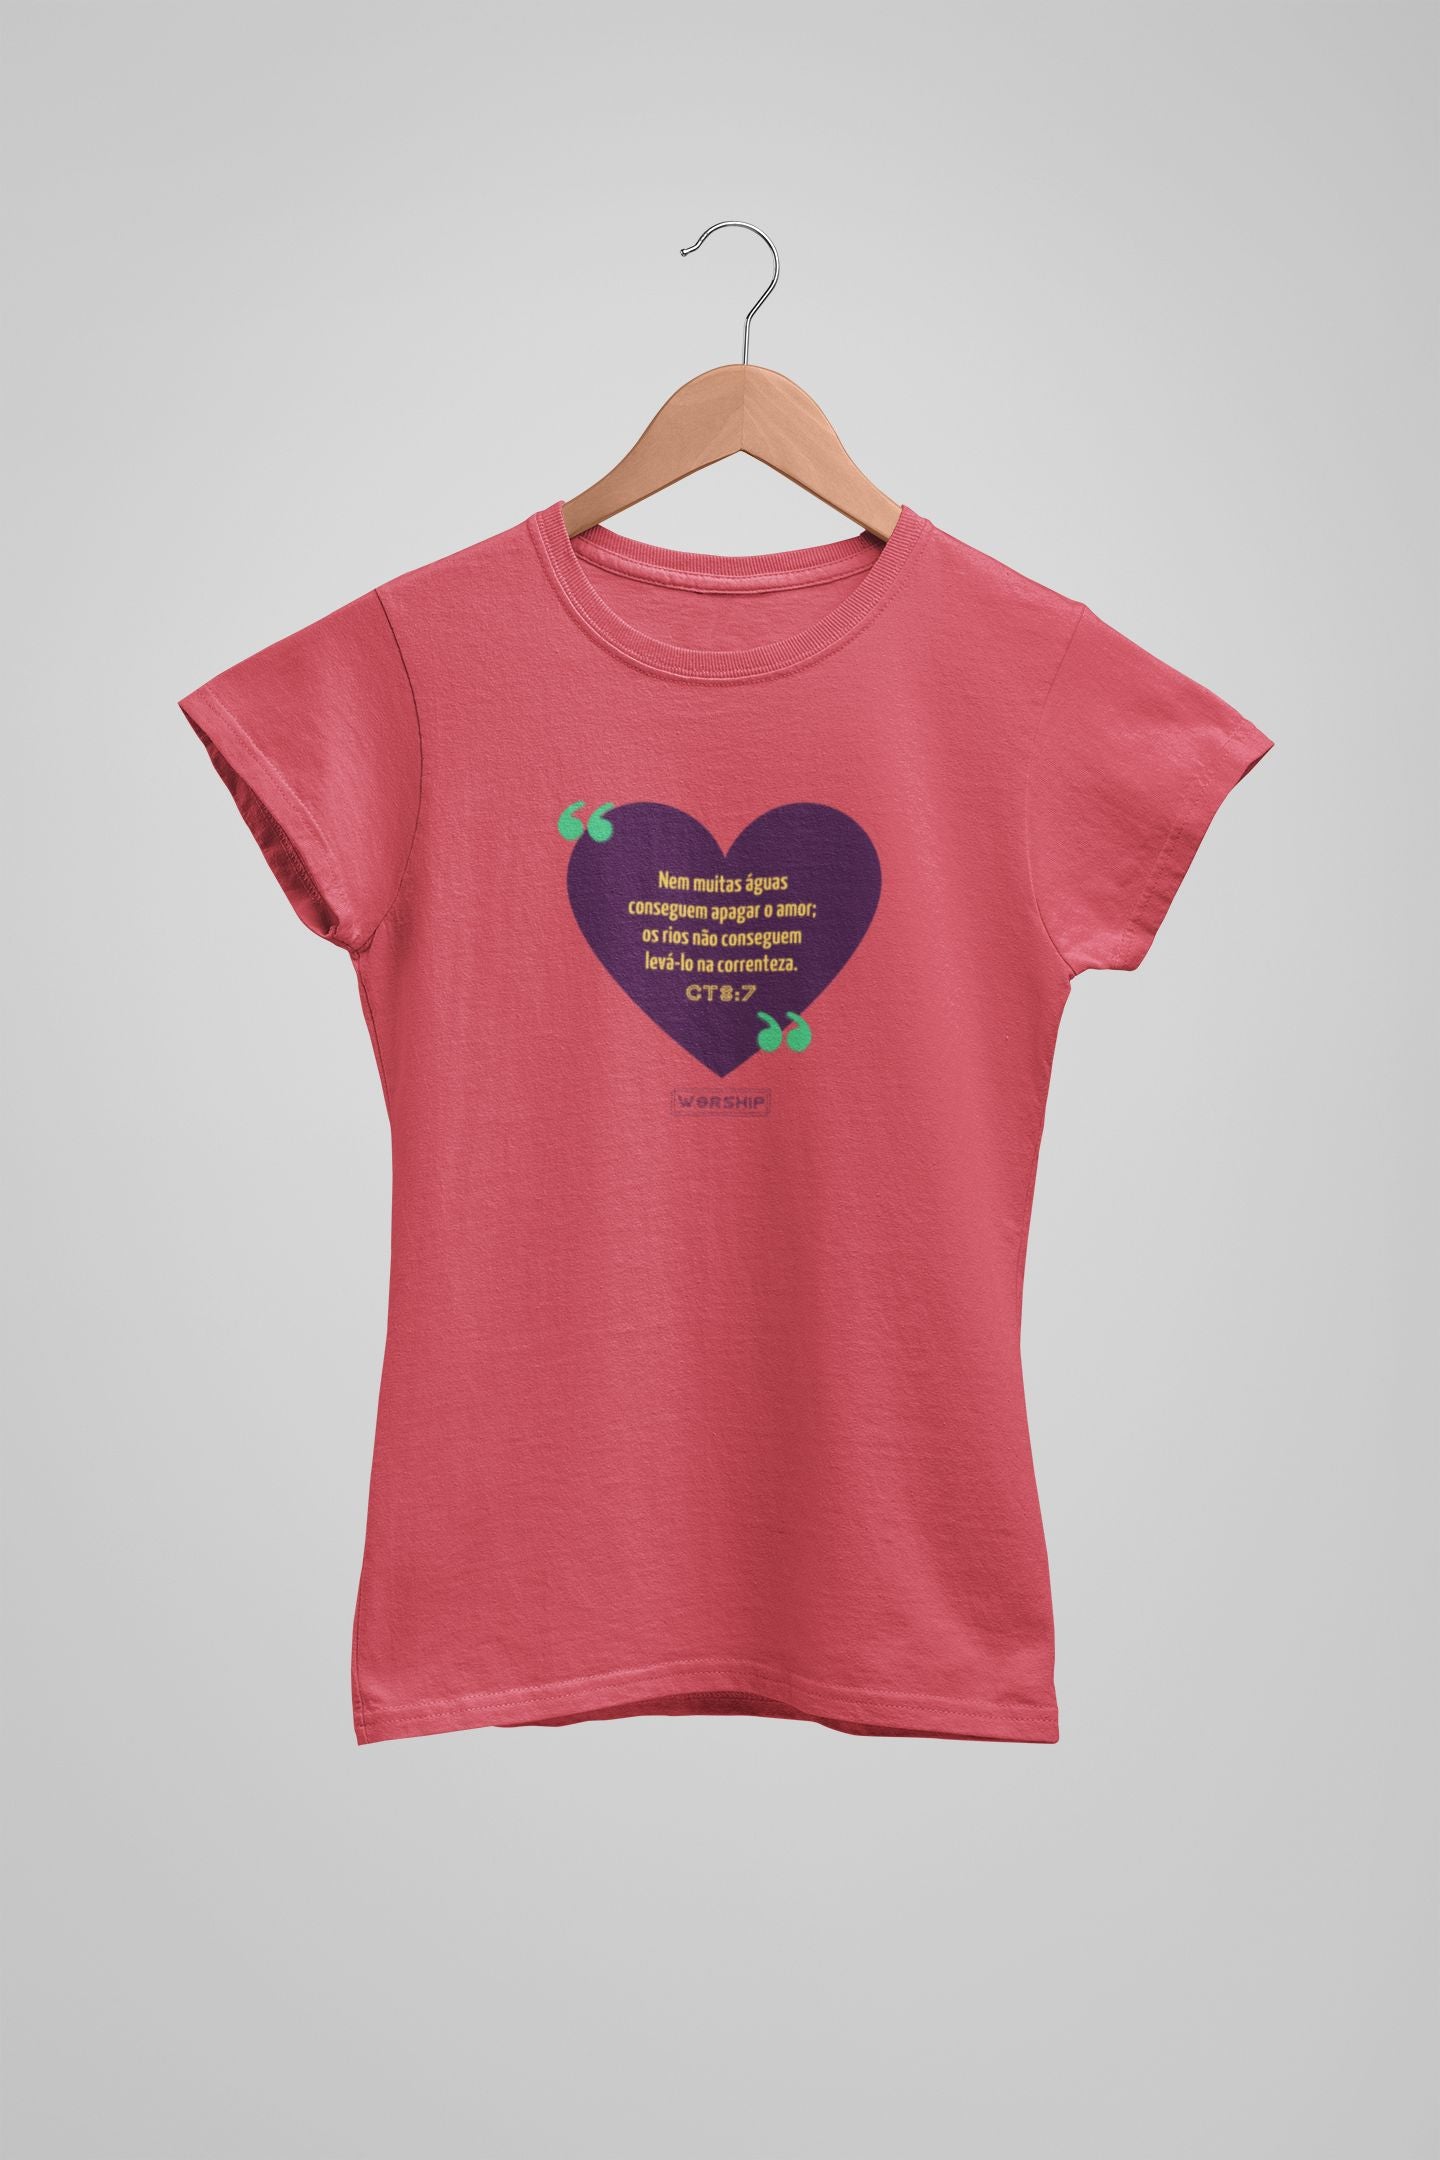 Camiseta Feminina AMOR DE DEUS 1 - estonada e colorida